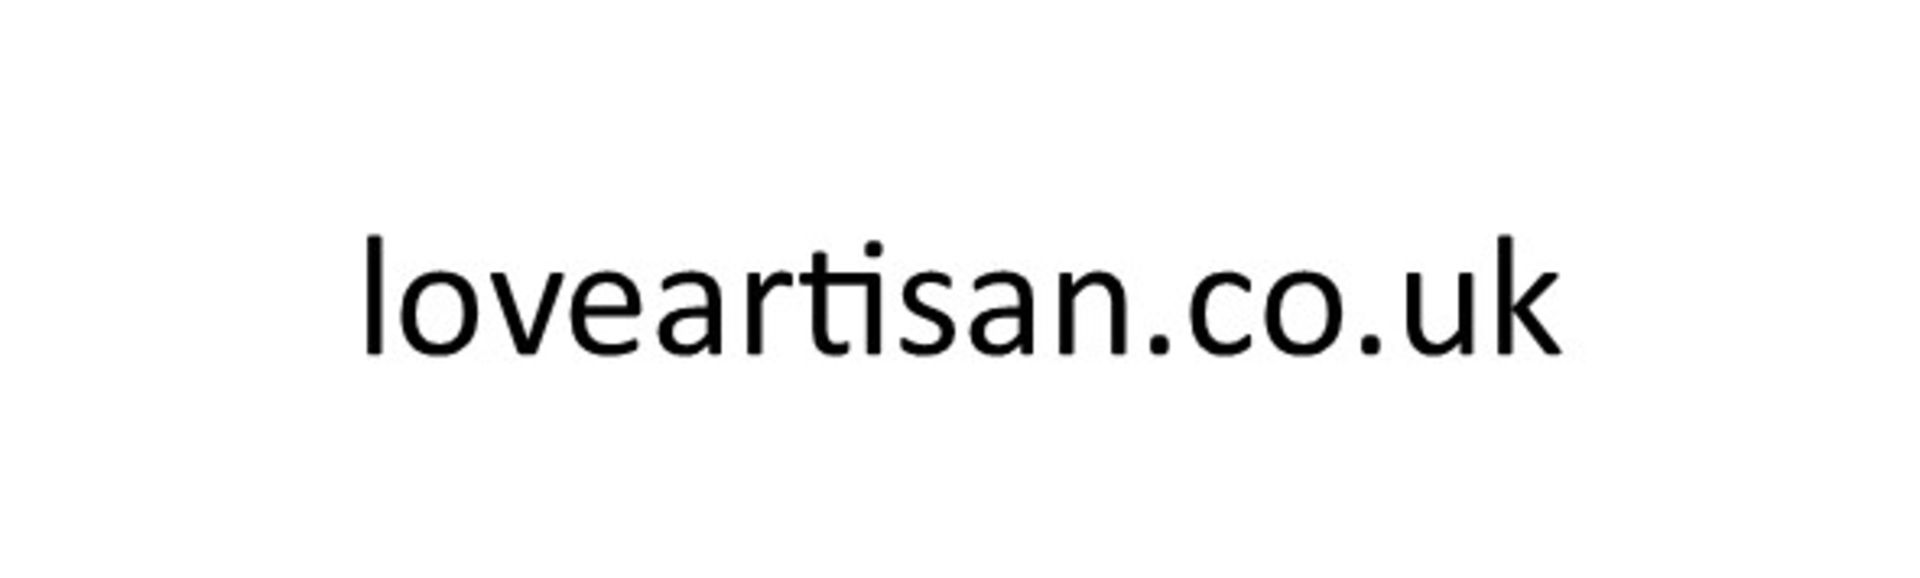 loveartisan.co.uk Domain name